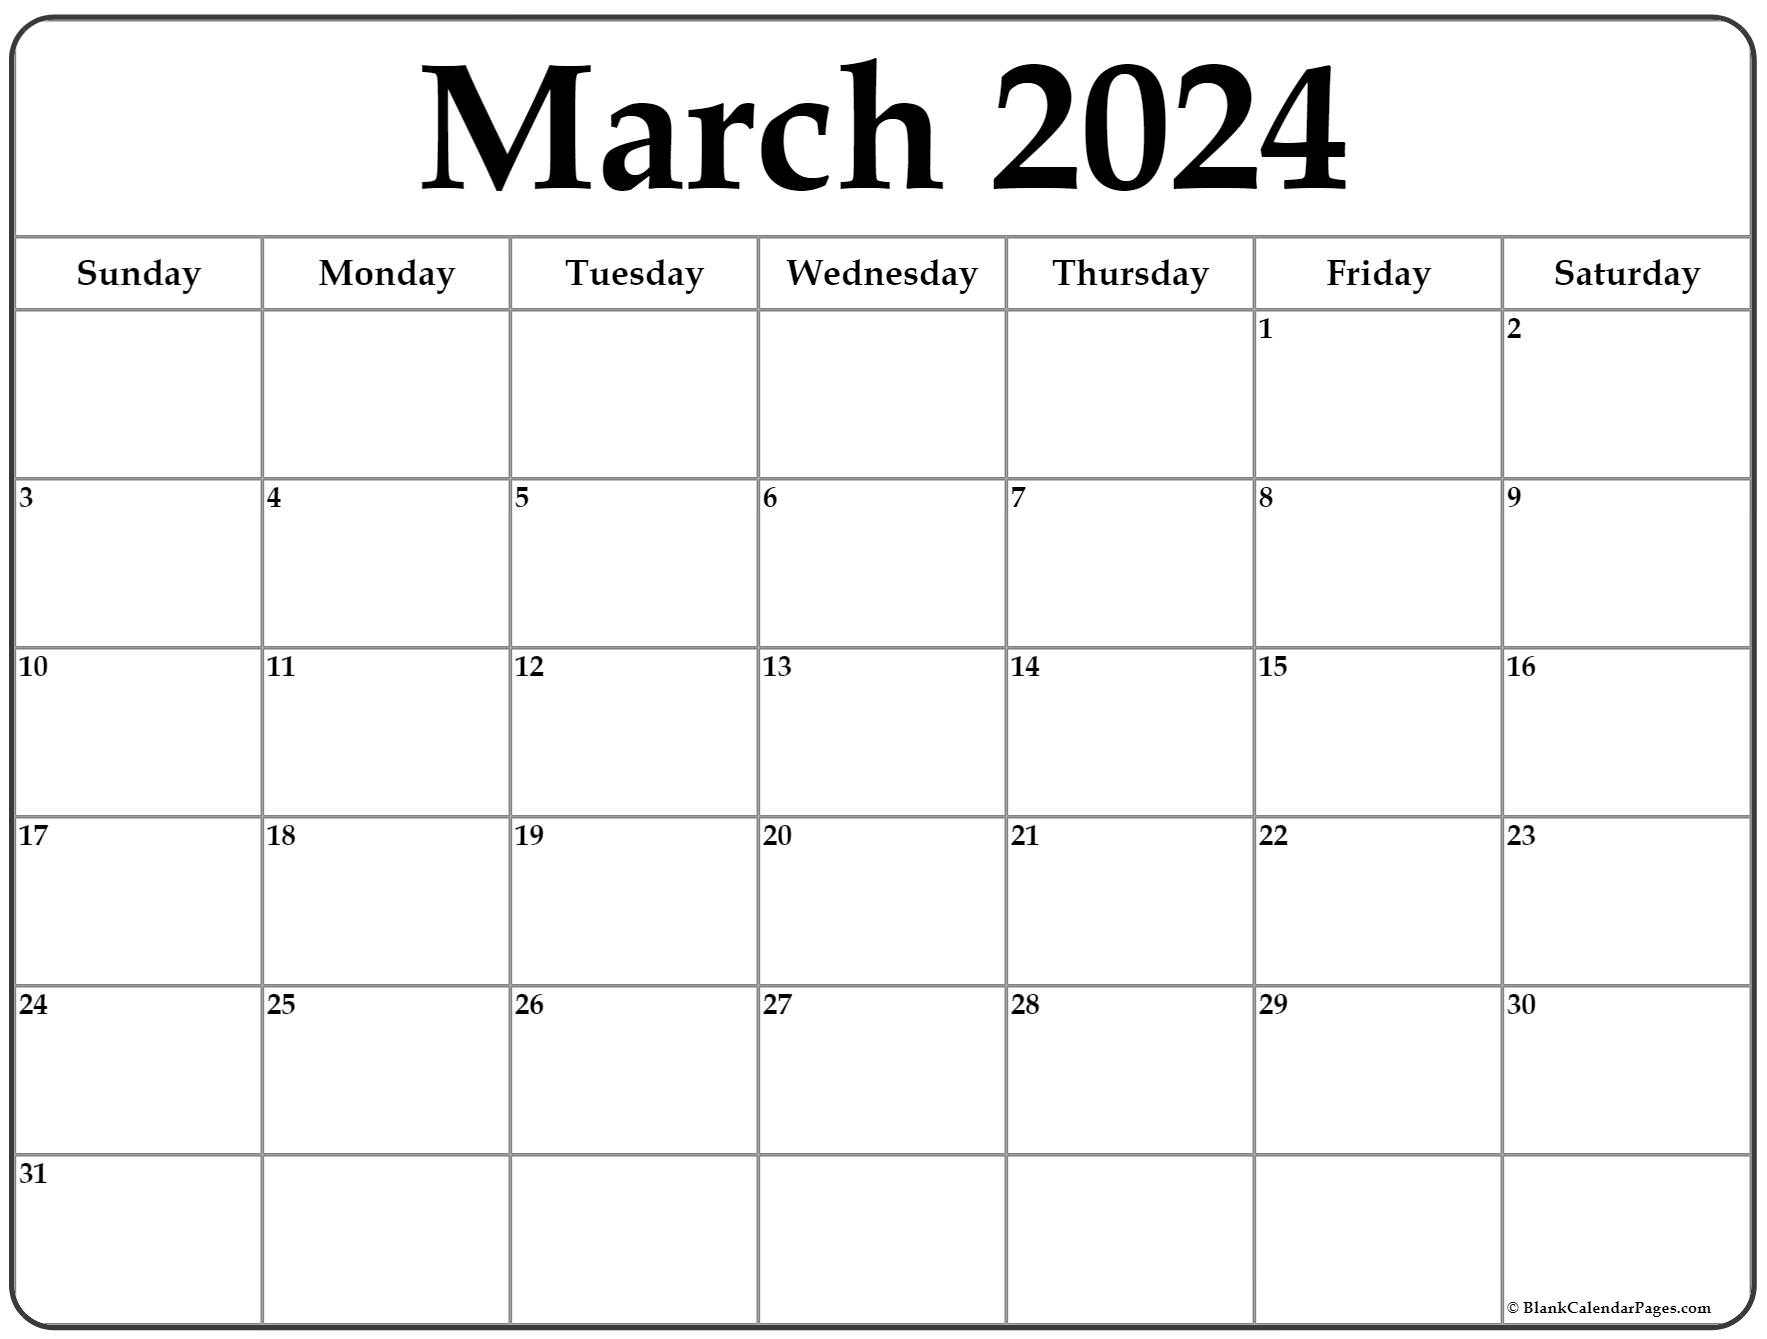 March 2023 Calendar Blank Calendar Pages Get Latest Map Update